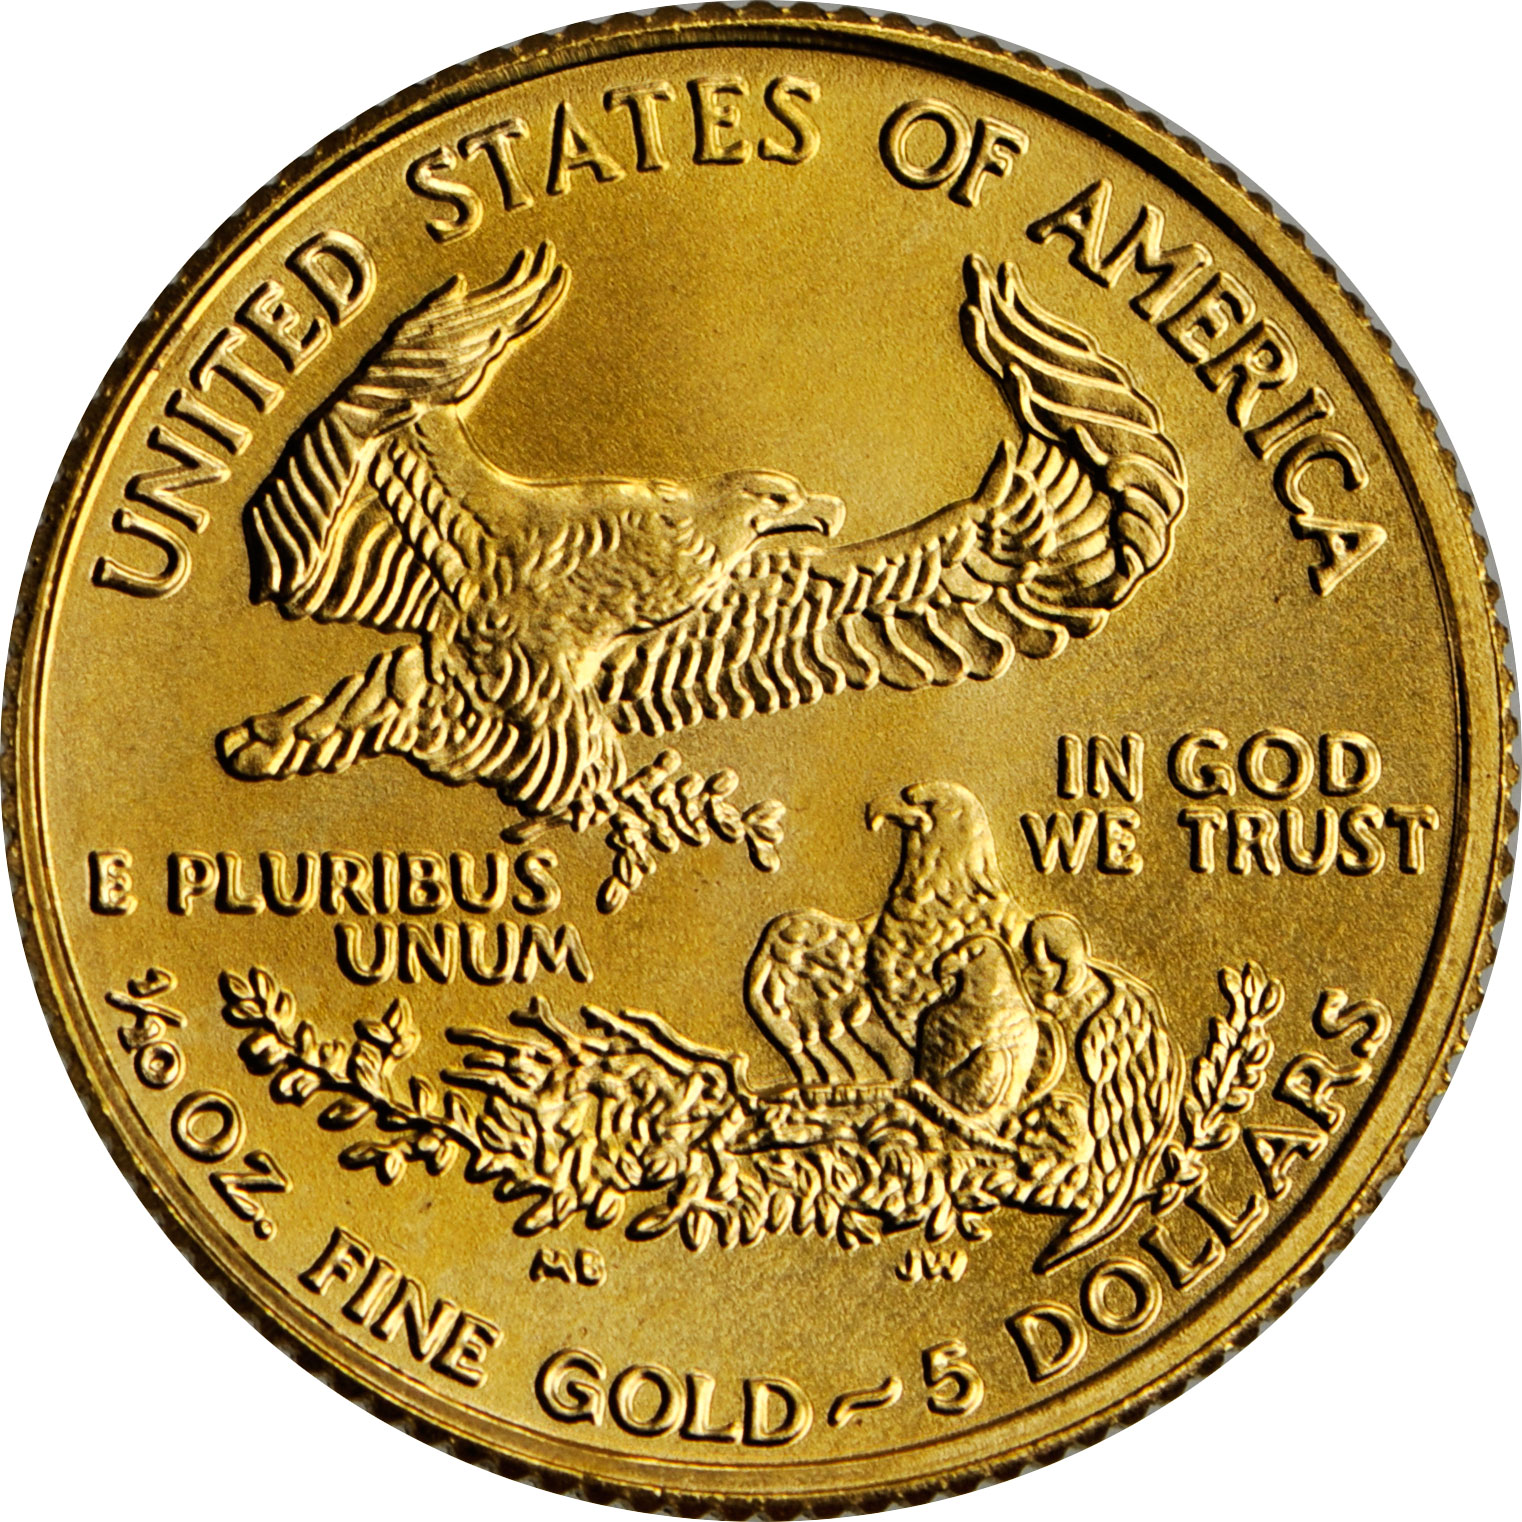 golden eagle coins delivery